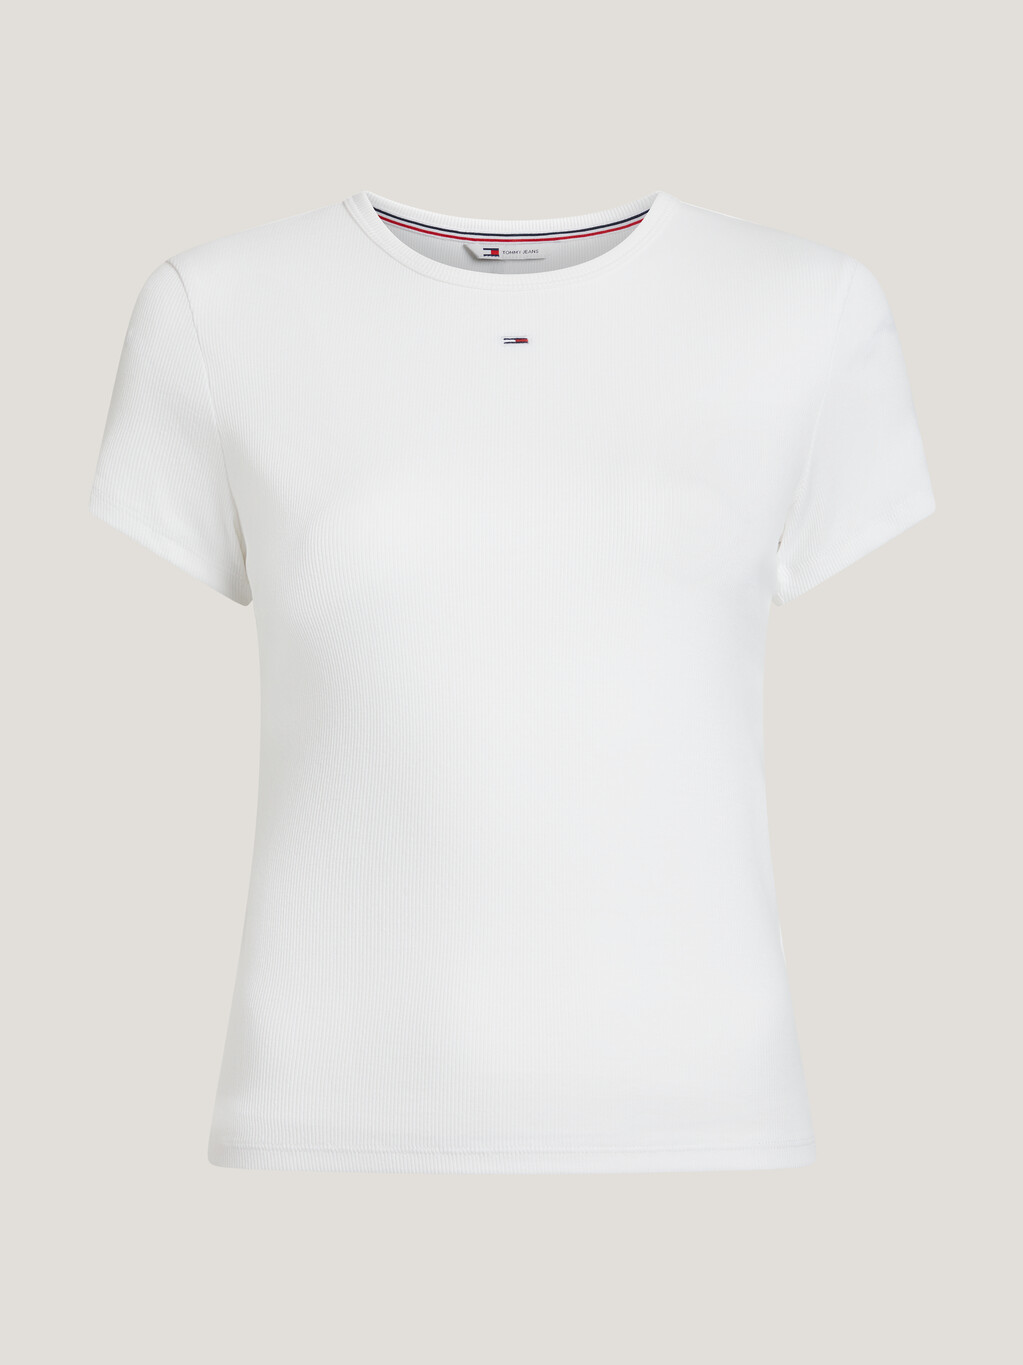 Essential 羅紋修身 T 恤, White, hi-res